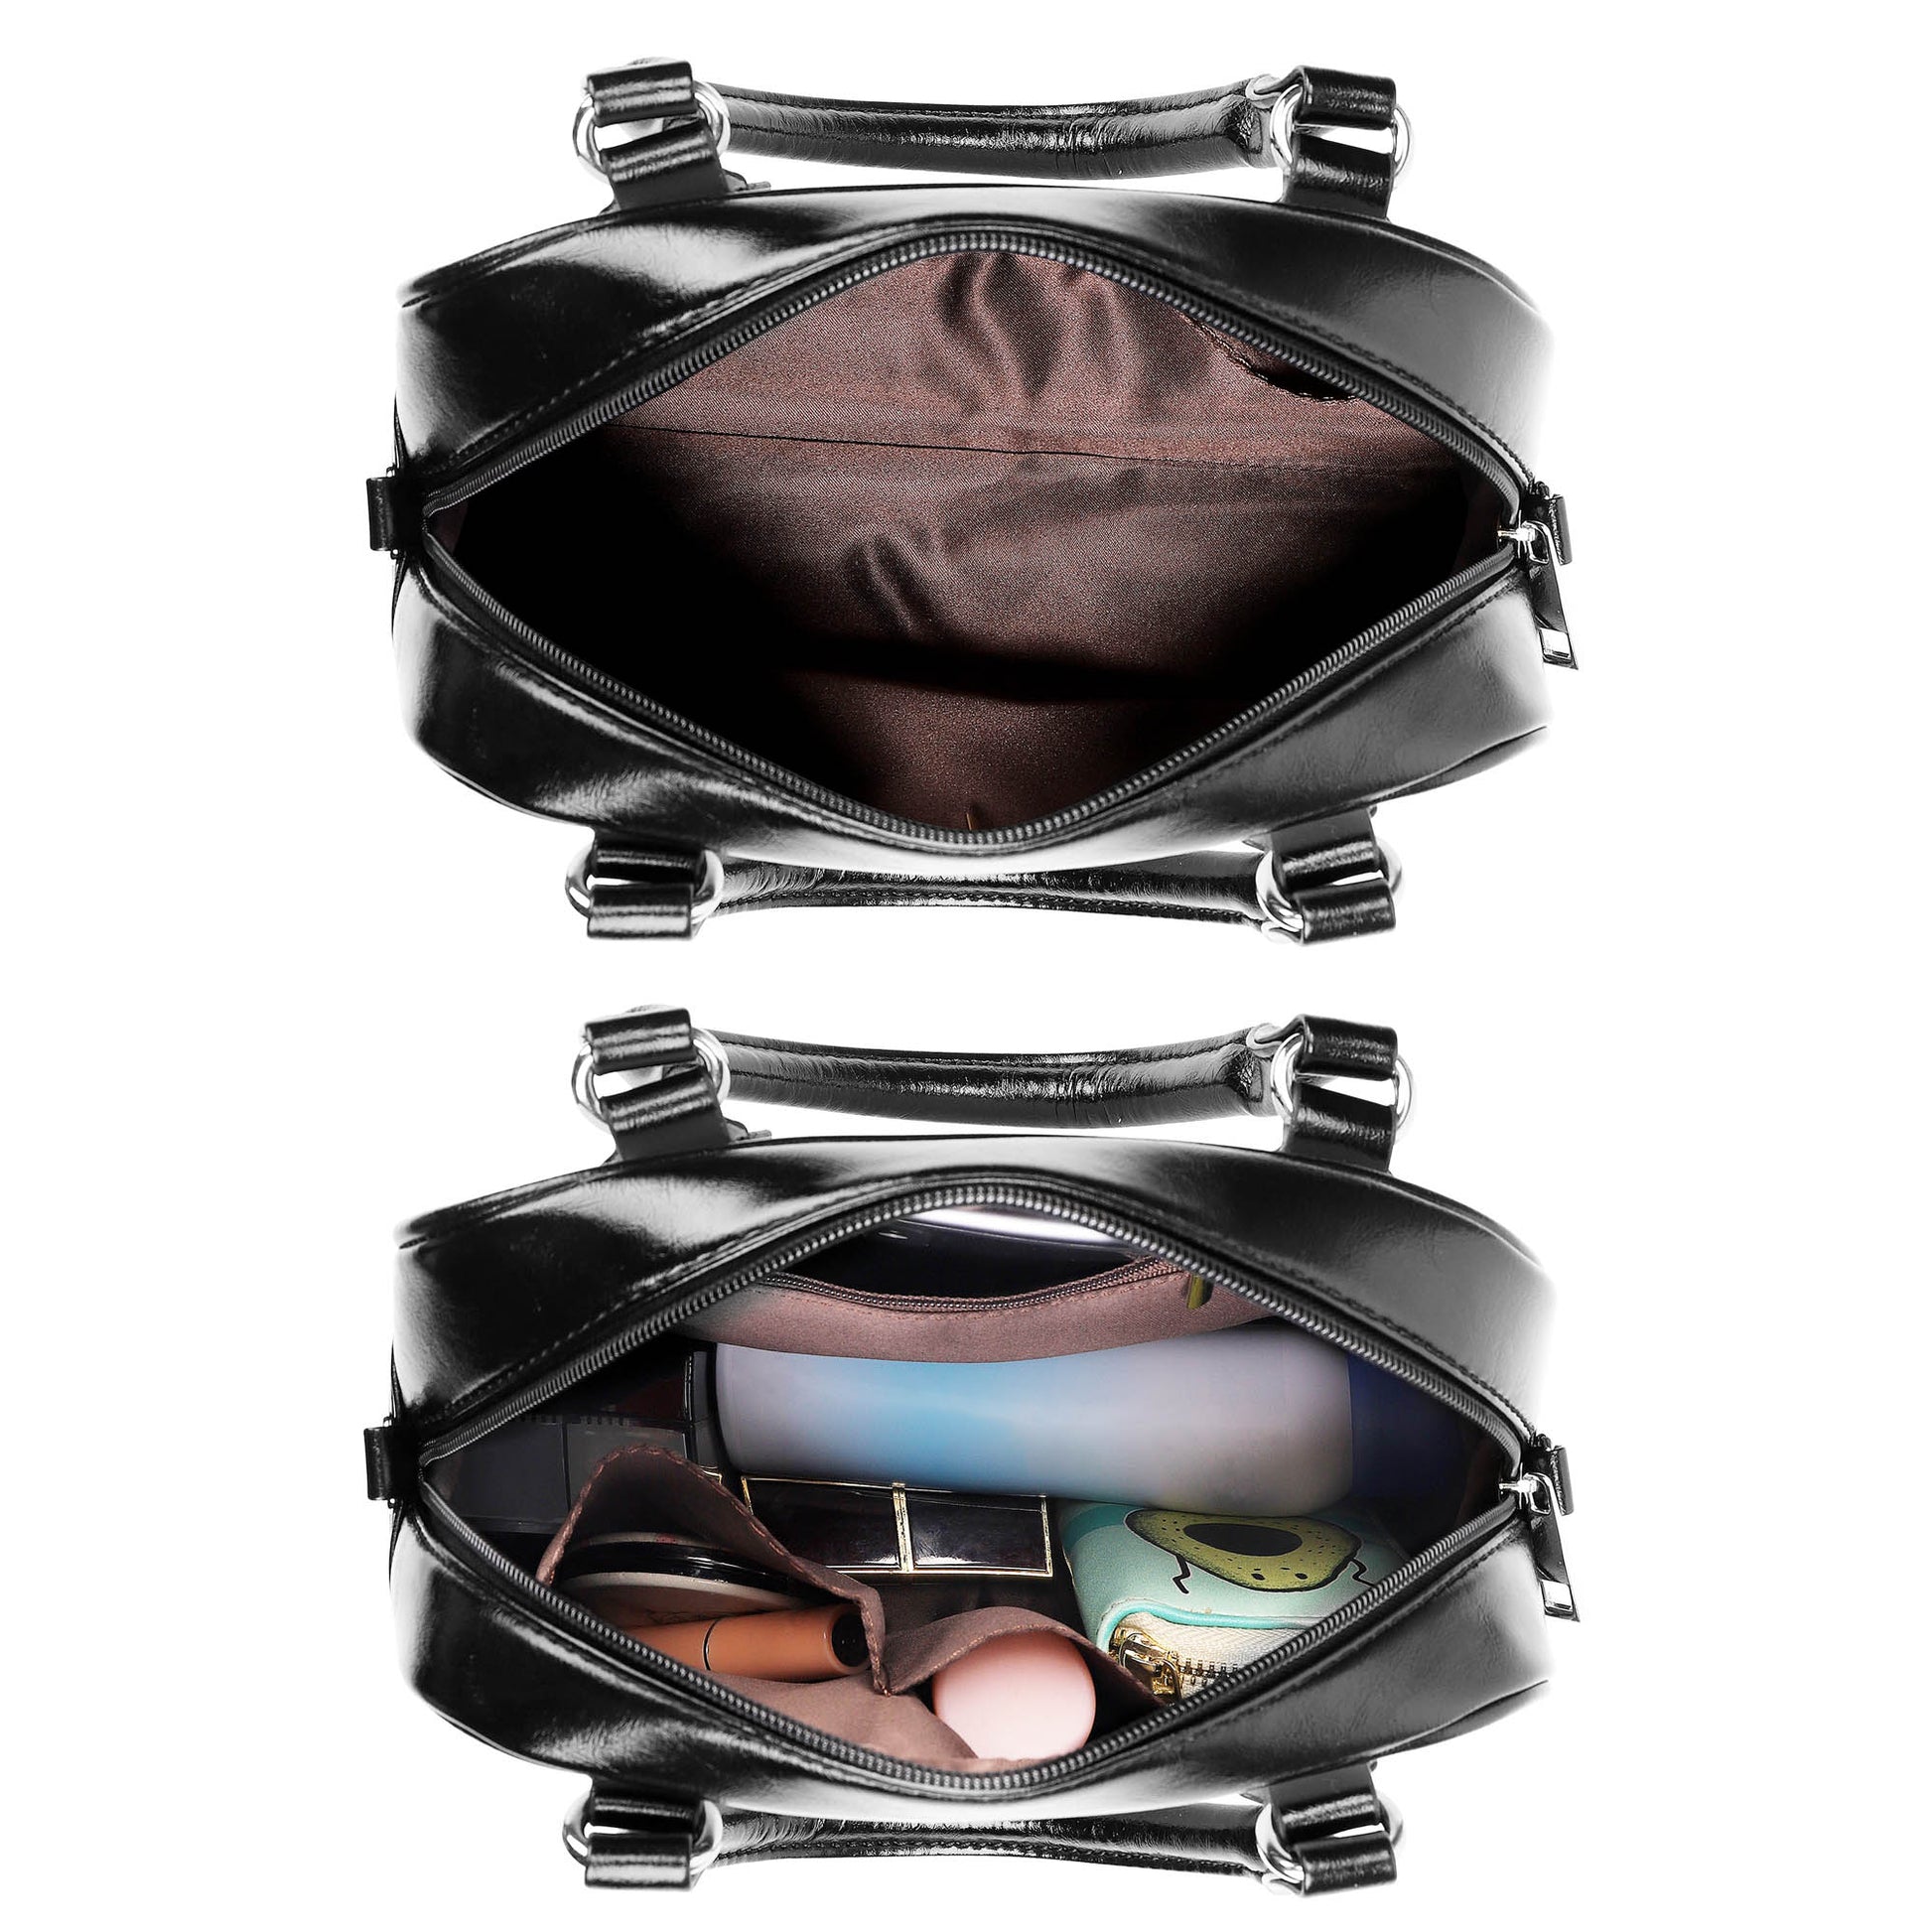 MacKenzie Tartan Shoulder Handbags - Tartanvibesclothing